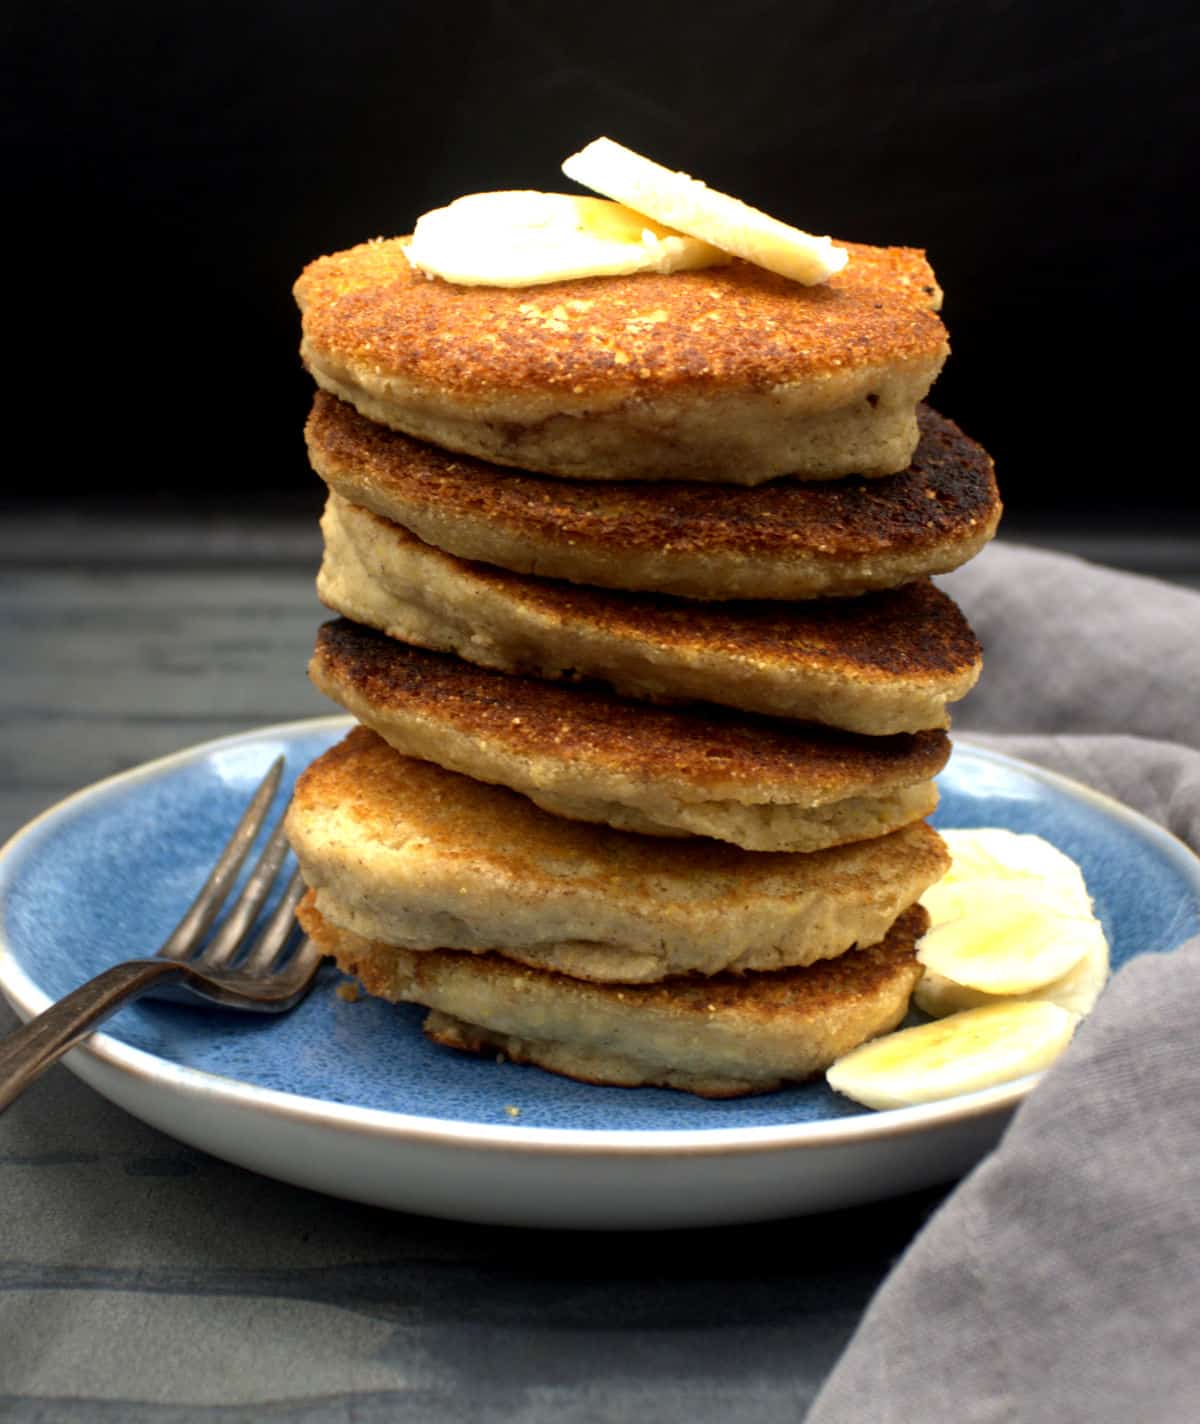 Vegan gluten-free multigrain pancakes stacked on plate with banana slices.